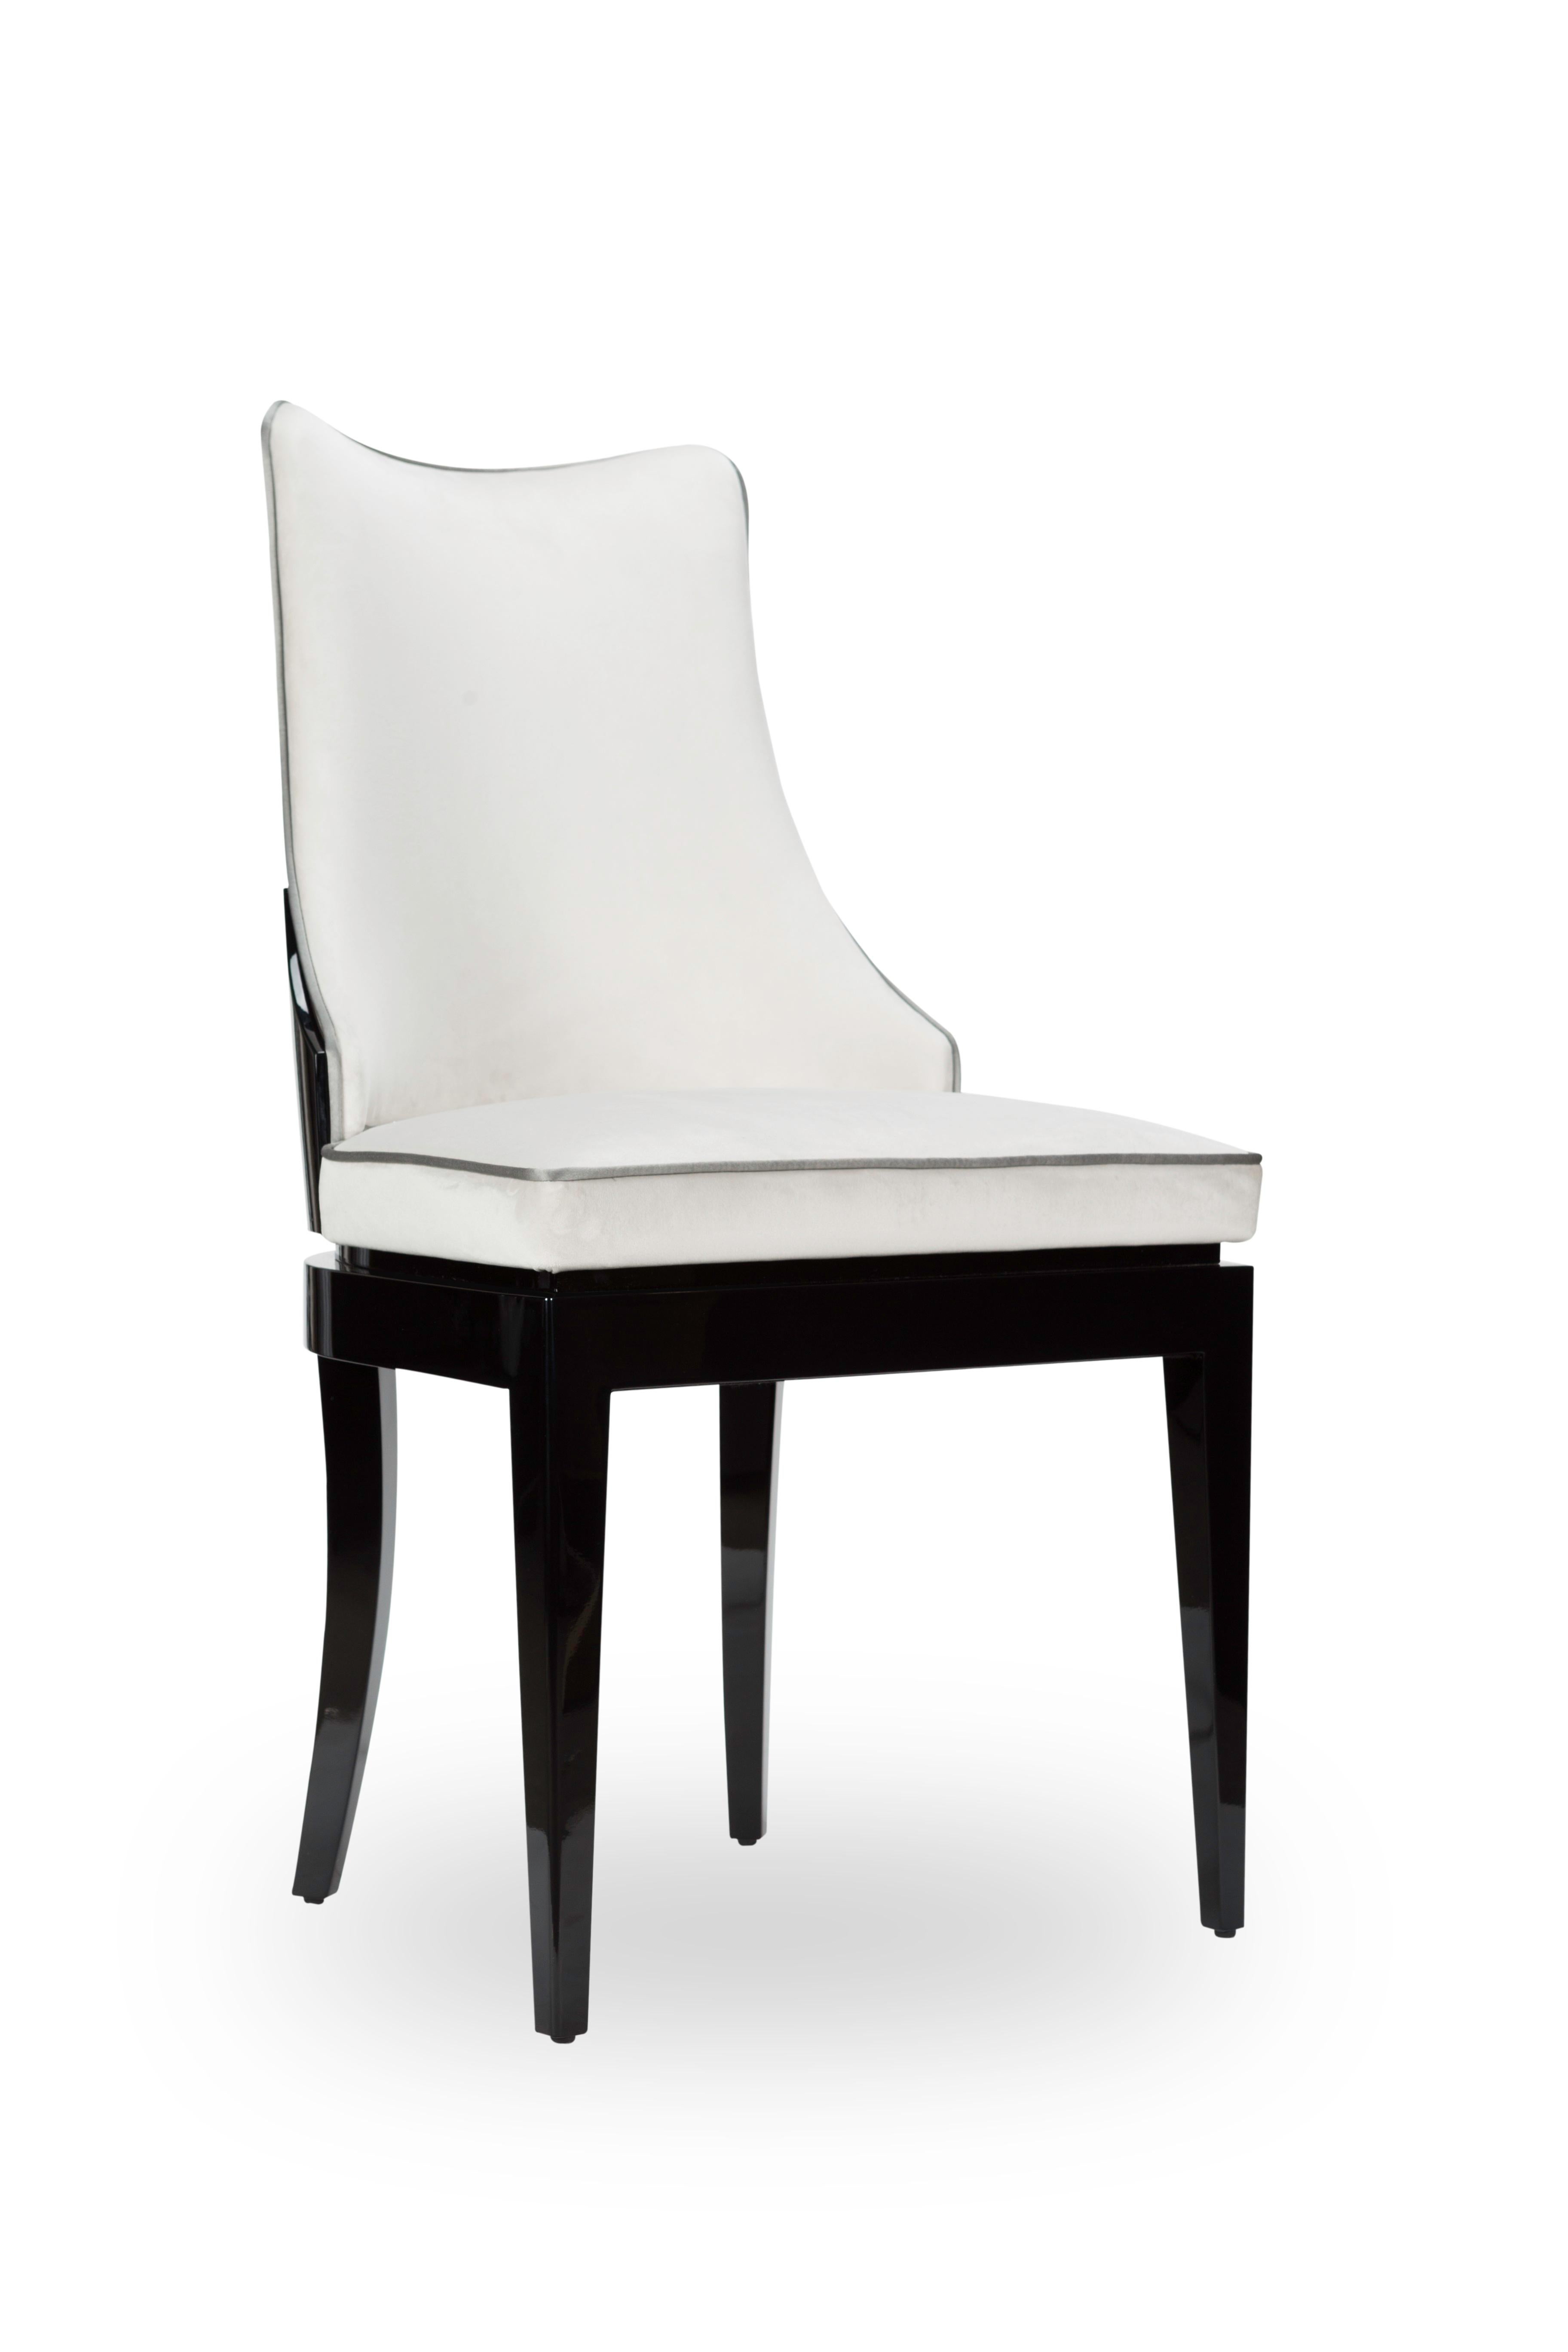 Portuguese Noir I Dining Chair by Memoir Essence For Sale